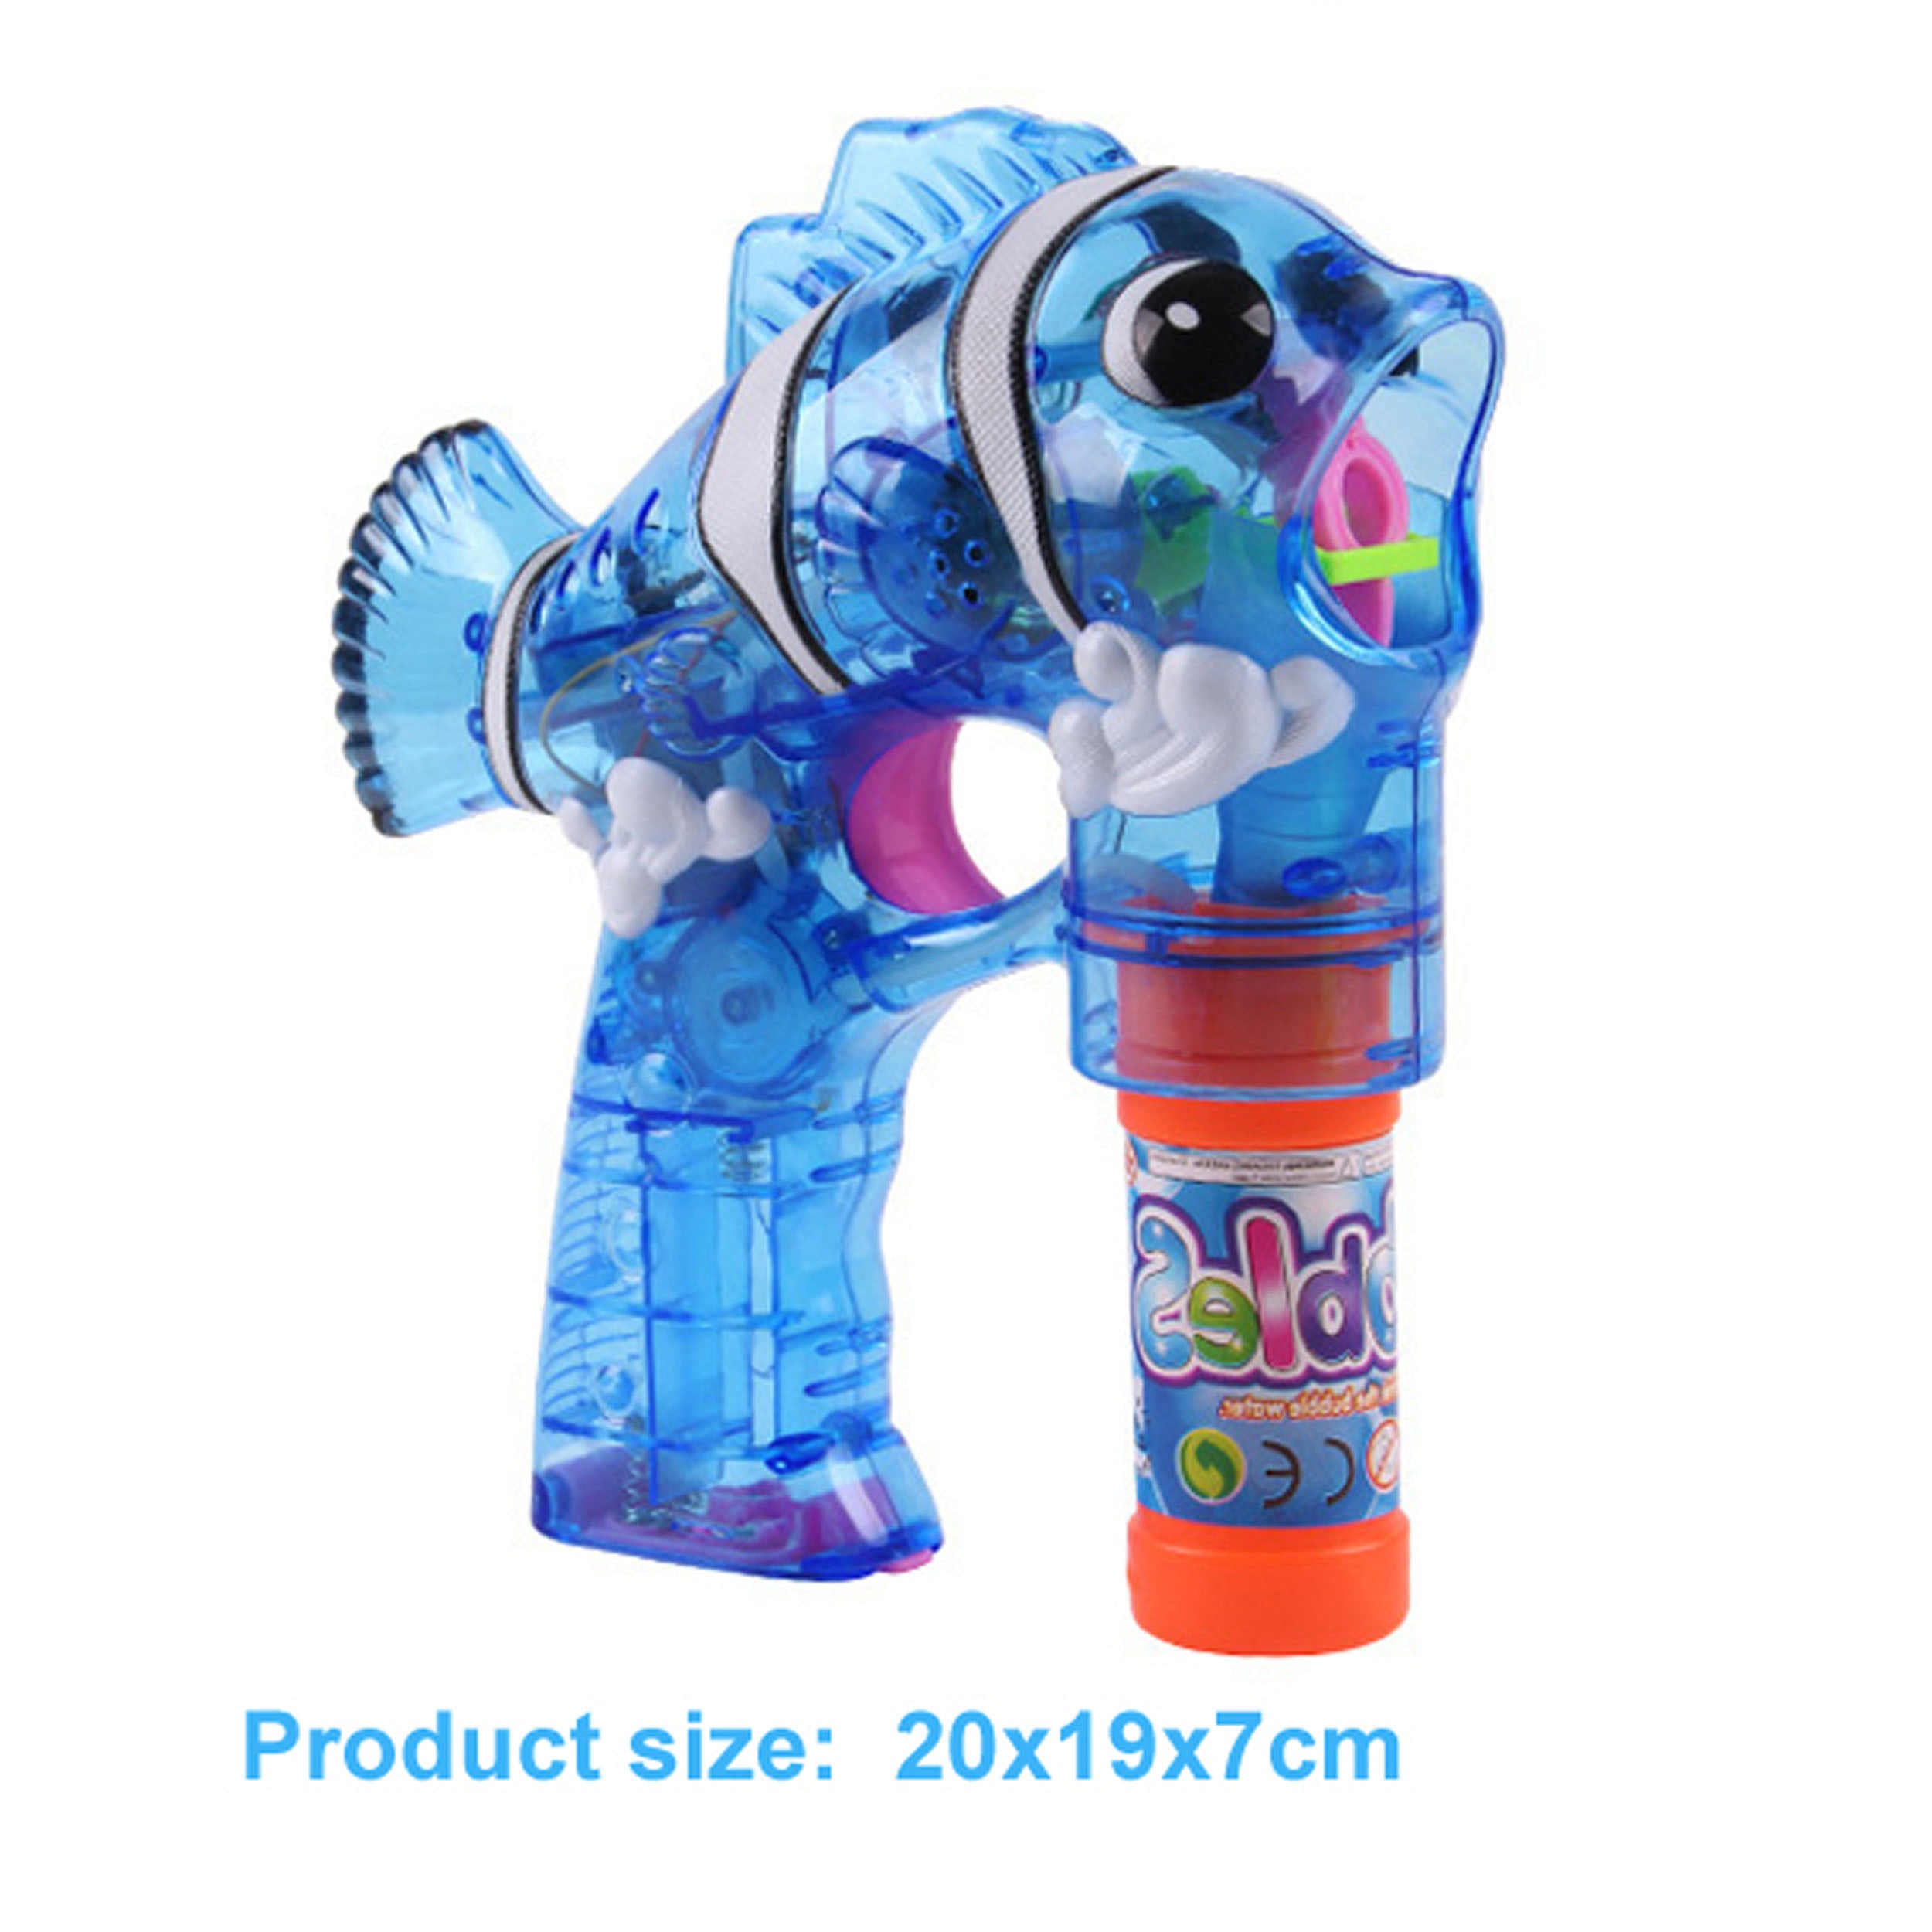 LED Bubble Gun Toy for Kids, Transparent Flash Shooters Bubble Blaster